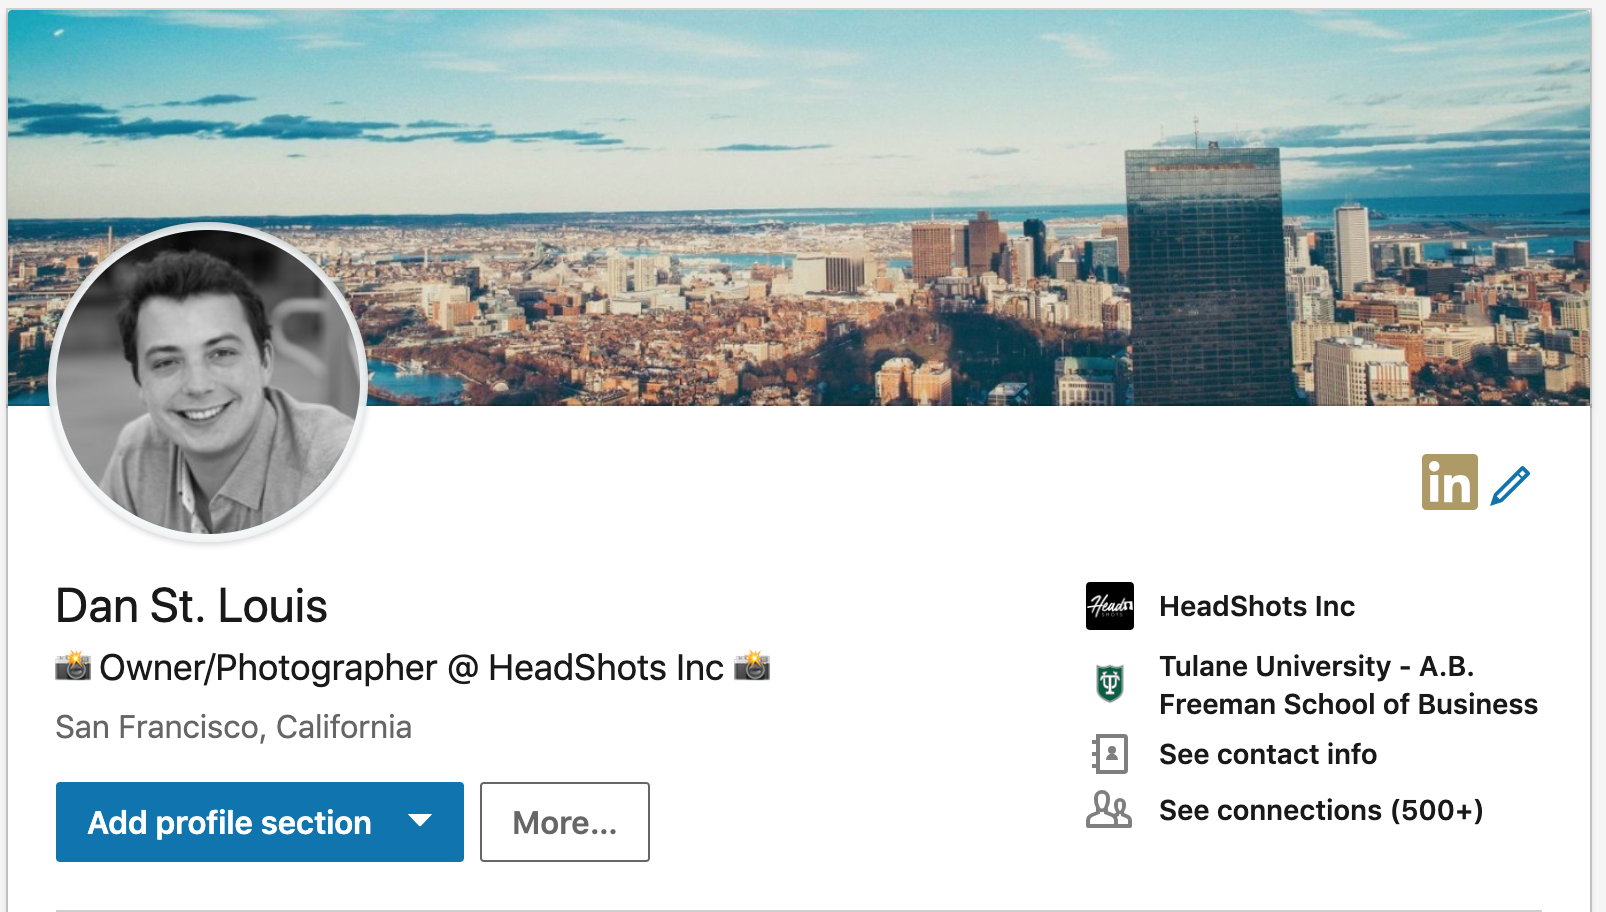 How to Choose an Awesome LinkedIn Cover Photo | HeadShots Inc